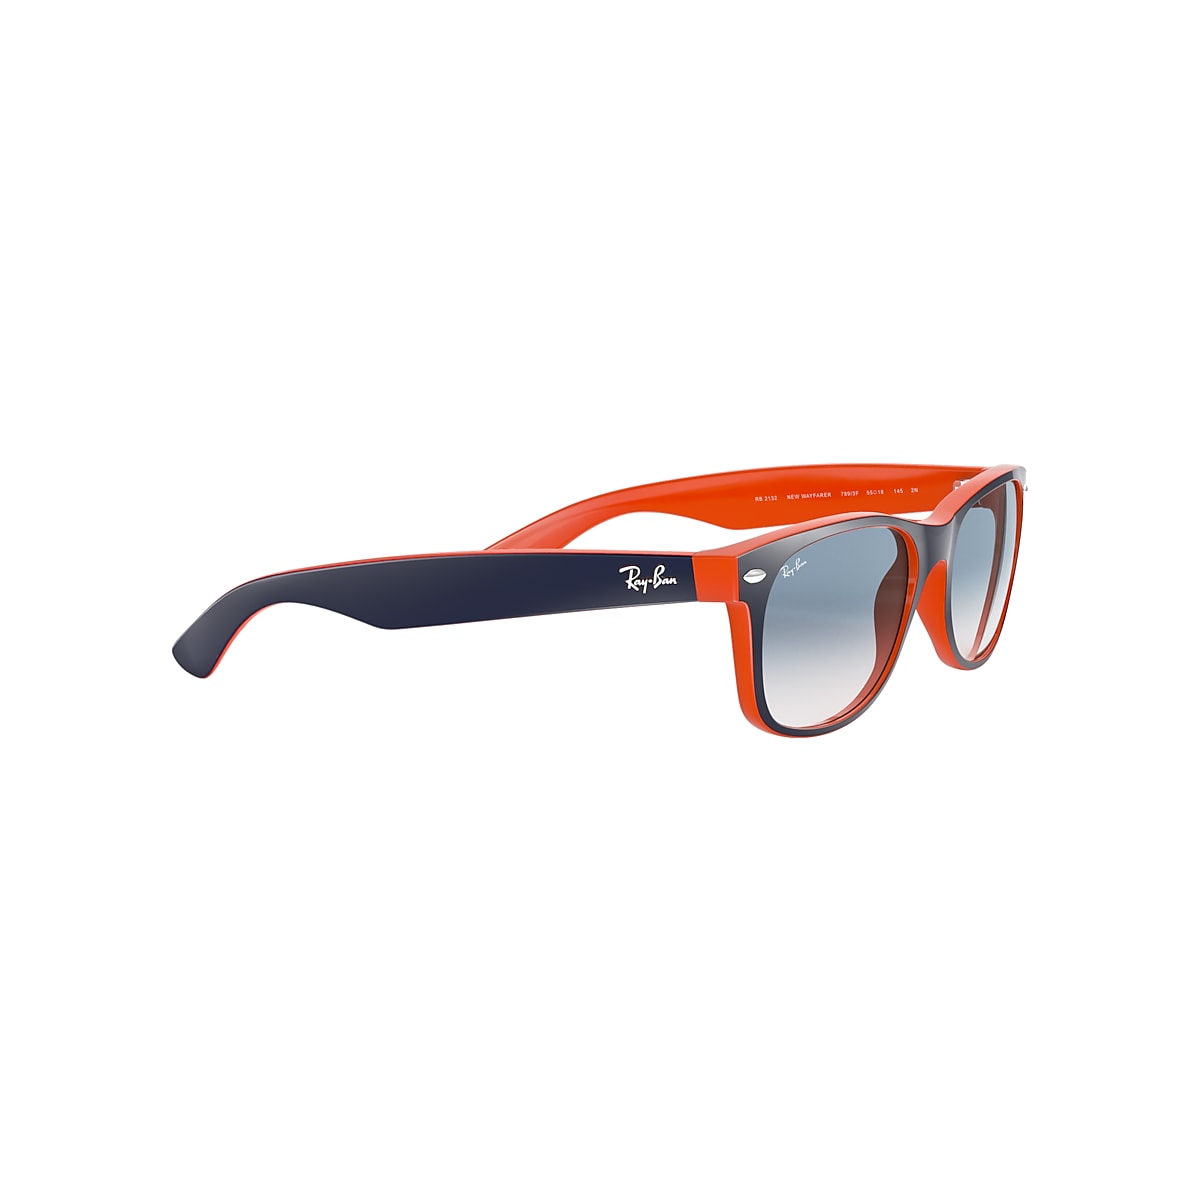 Sunglasses Ray-Ban New Wayfarer Orange RB2132 789/3F 55-18